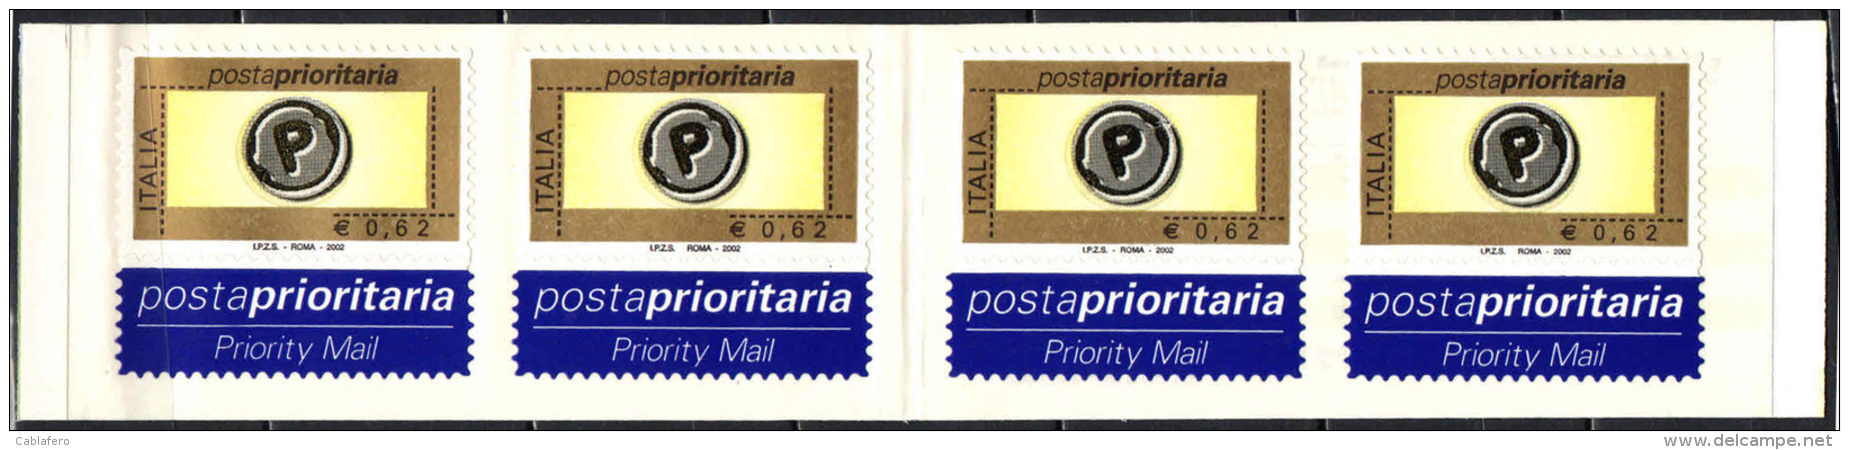 ITALIA - 2002 - POSTA PRIORITARIA - 4 FRANCOBOLLI DA 0,62 CENT - BOOKLET - NUOVI AUTOADESIVO - 2001-10: Mint/hinged